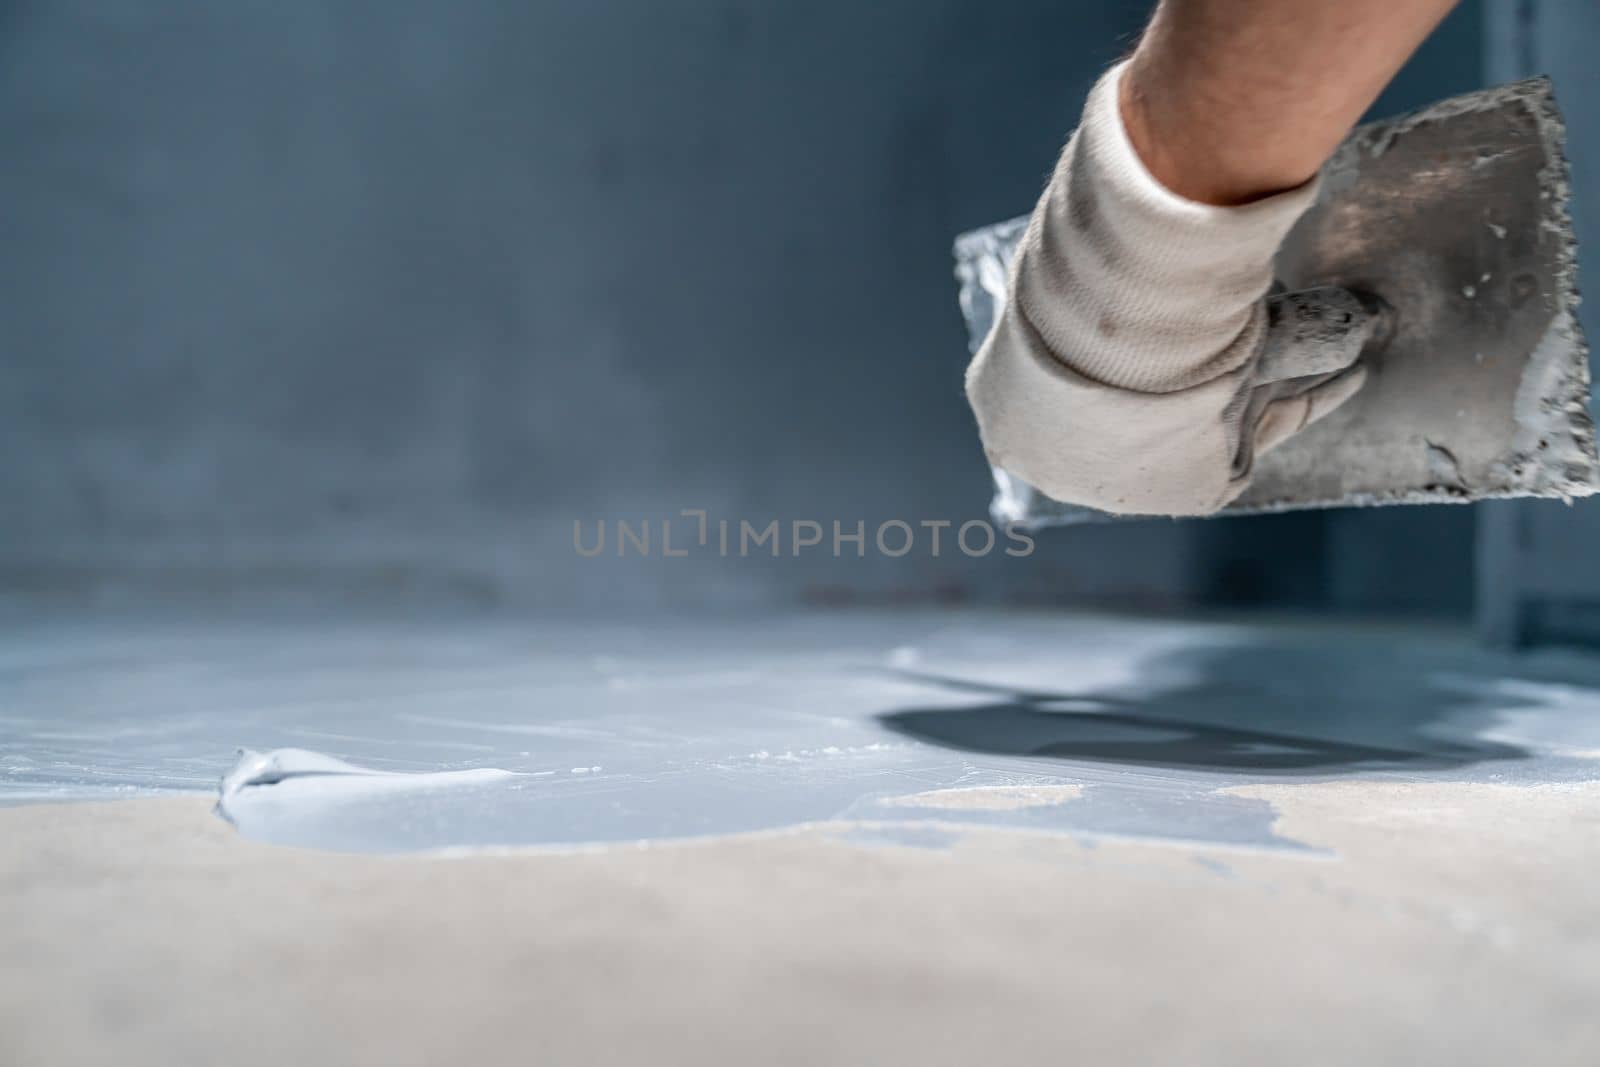 waterproofing of the bathroom floor in a new building by Edophoto